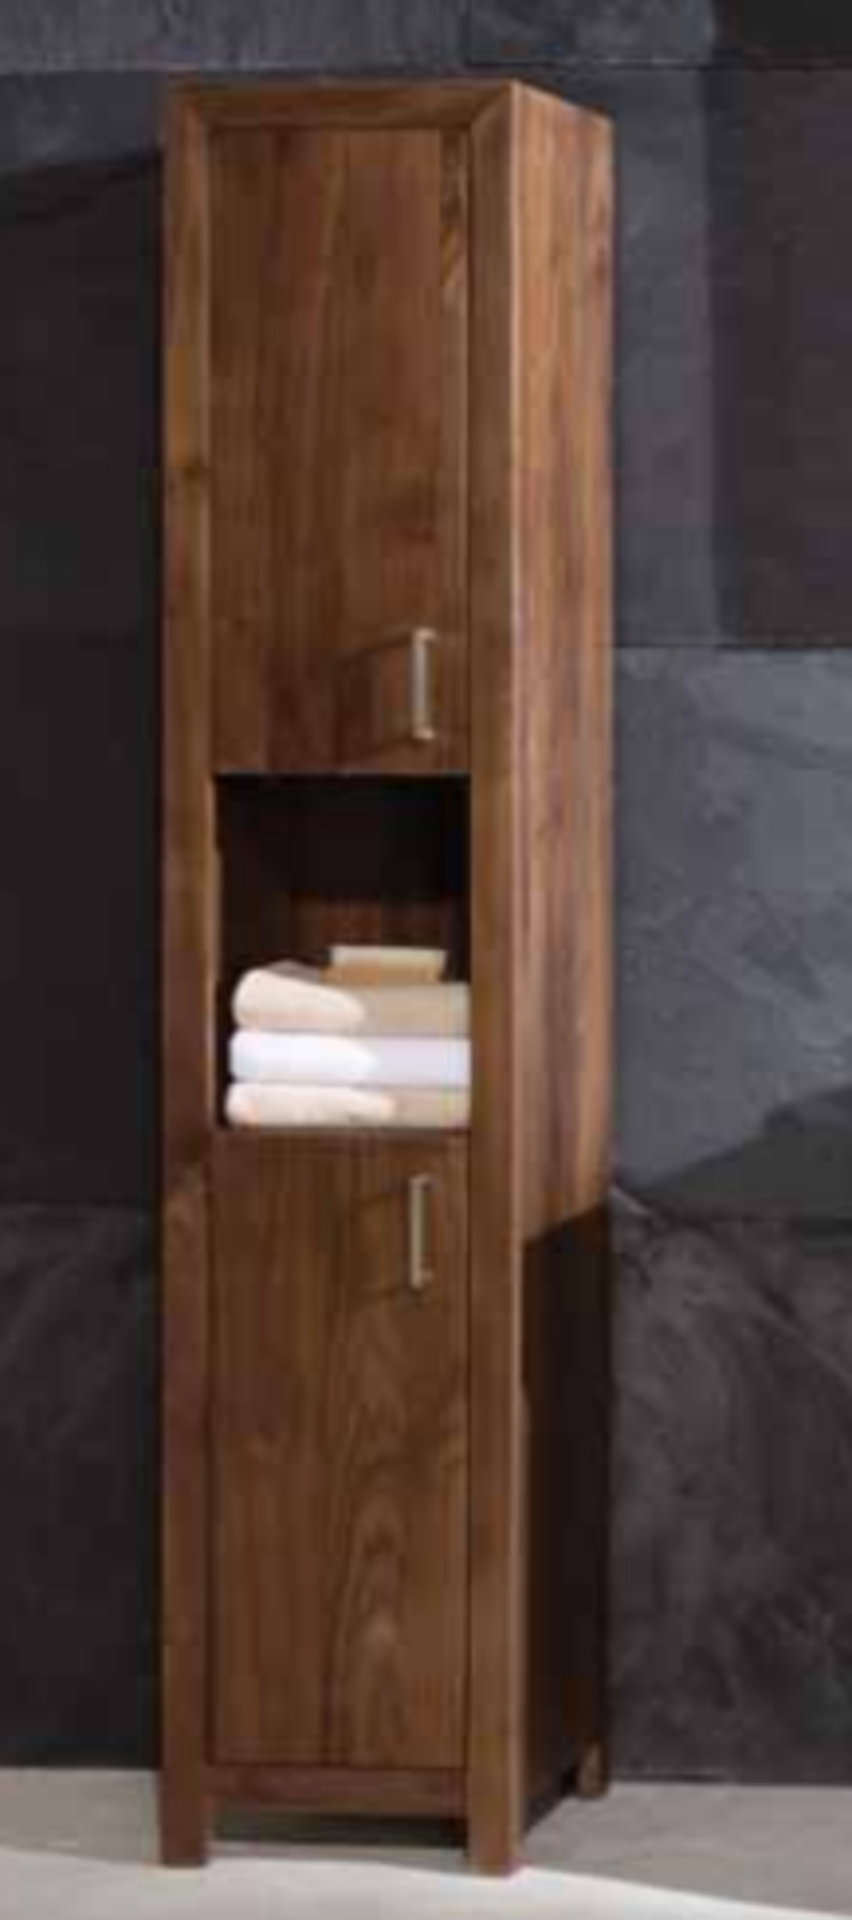 1 x Stonearth Freestanding Tallboy Bathroom Storage Cabinet - American Solid Walnut - RRP £996! - Image 7 of 14